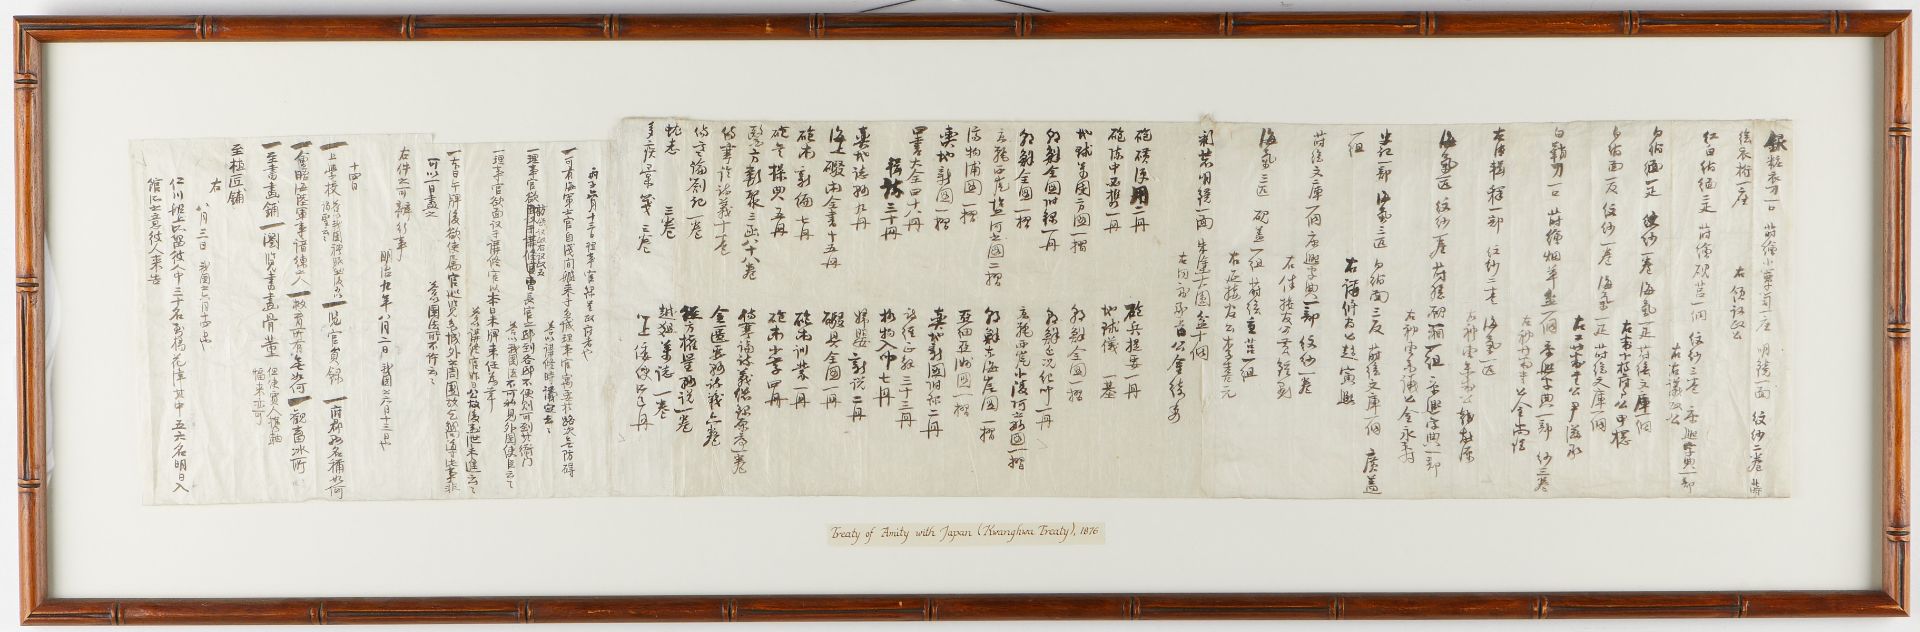 19th c. Korean Scroll Diplomatic Record